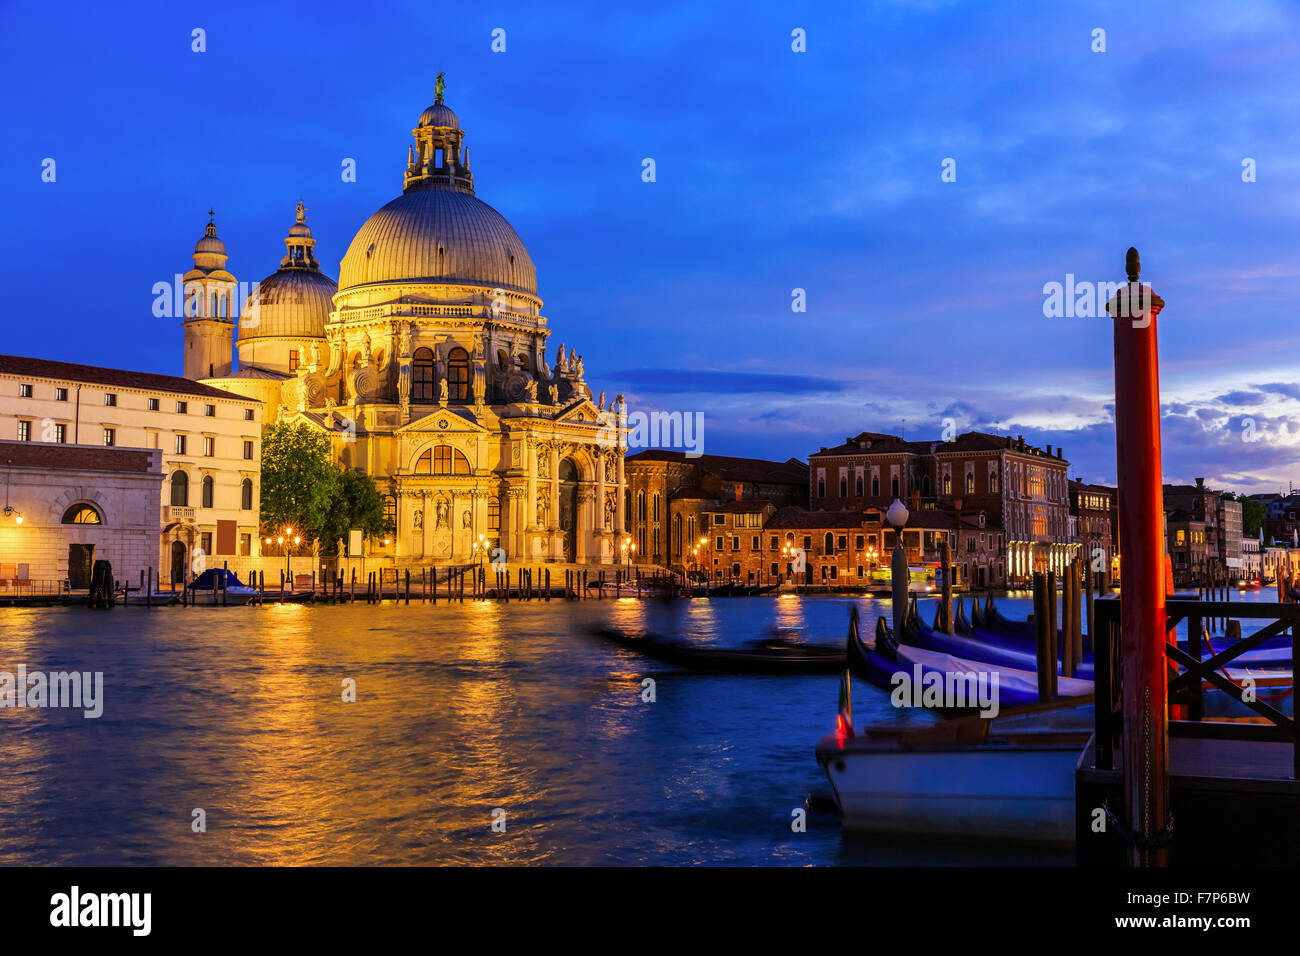 Venise, Italie. Grand Canal et basilique Santa Maria della Salute. Banque D'Images